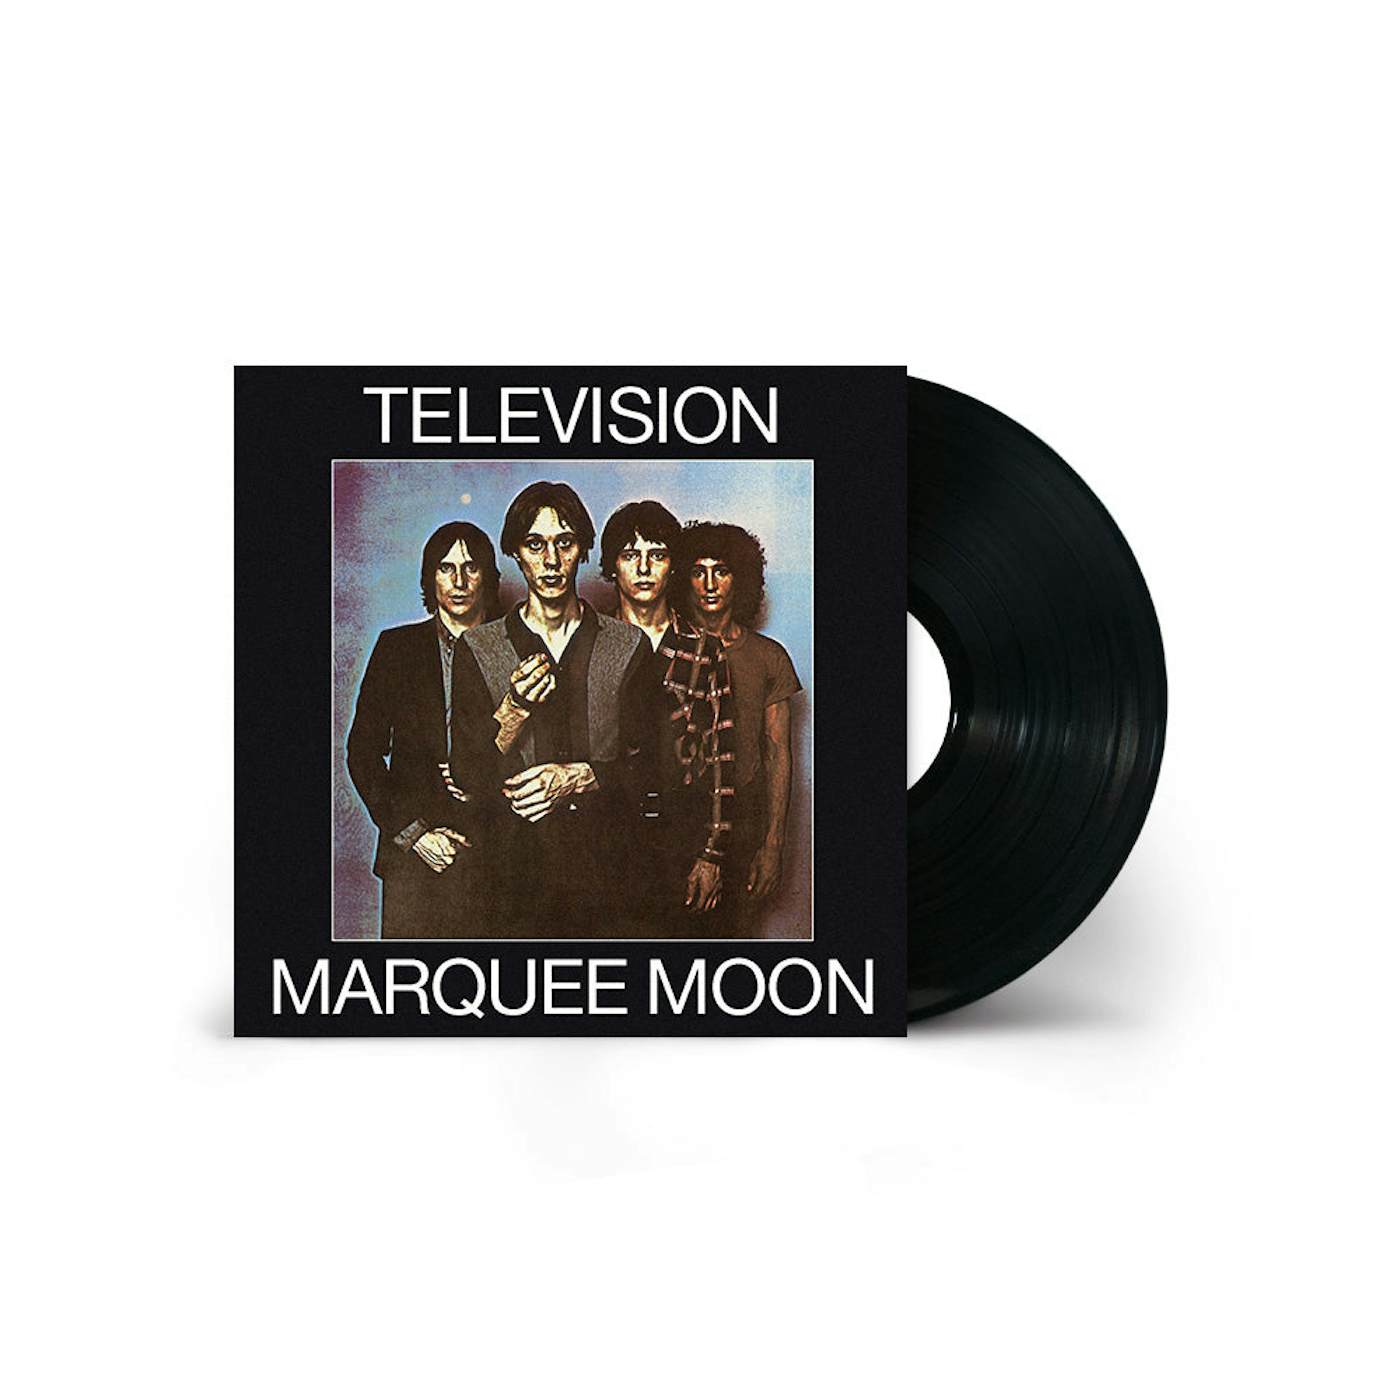 Gripsweat - TELEVISION, MARQUEE MOON, ORIGINAL 1977 RELEASE, LP, ELEKTRA  K52046